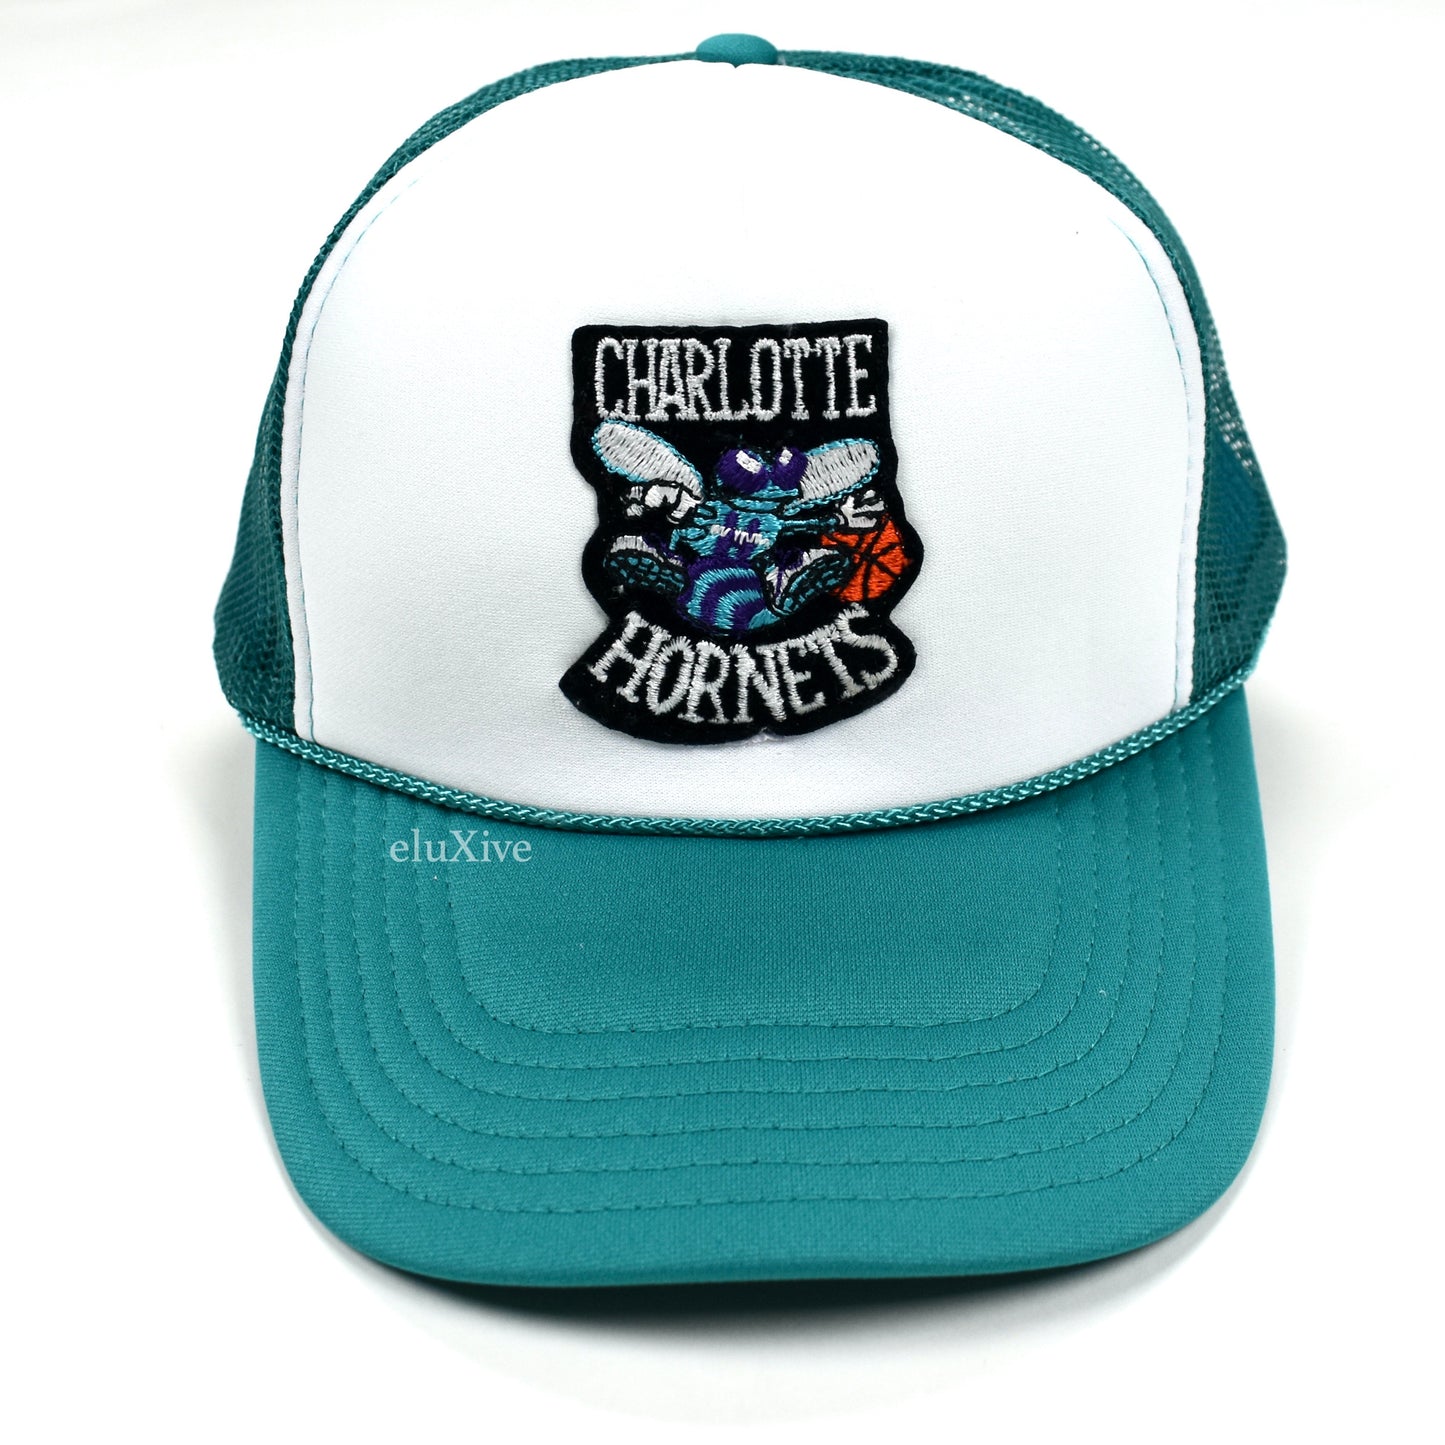 Retro - Charlotte Hornets 90s Vintage Patch Trucker Hat